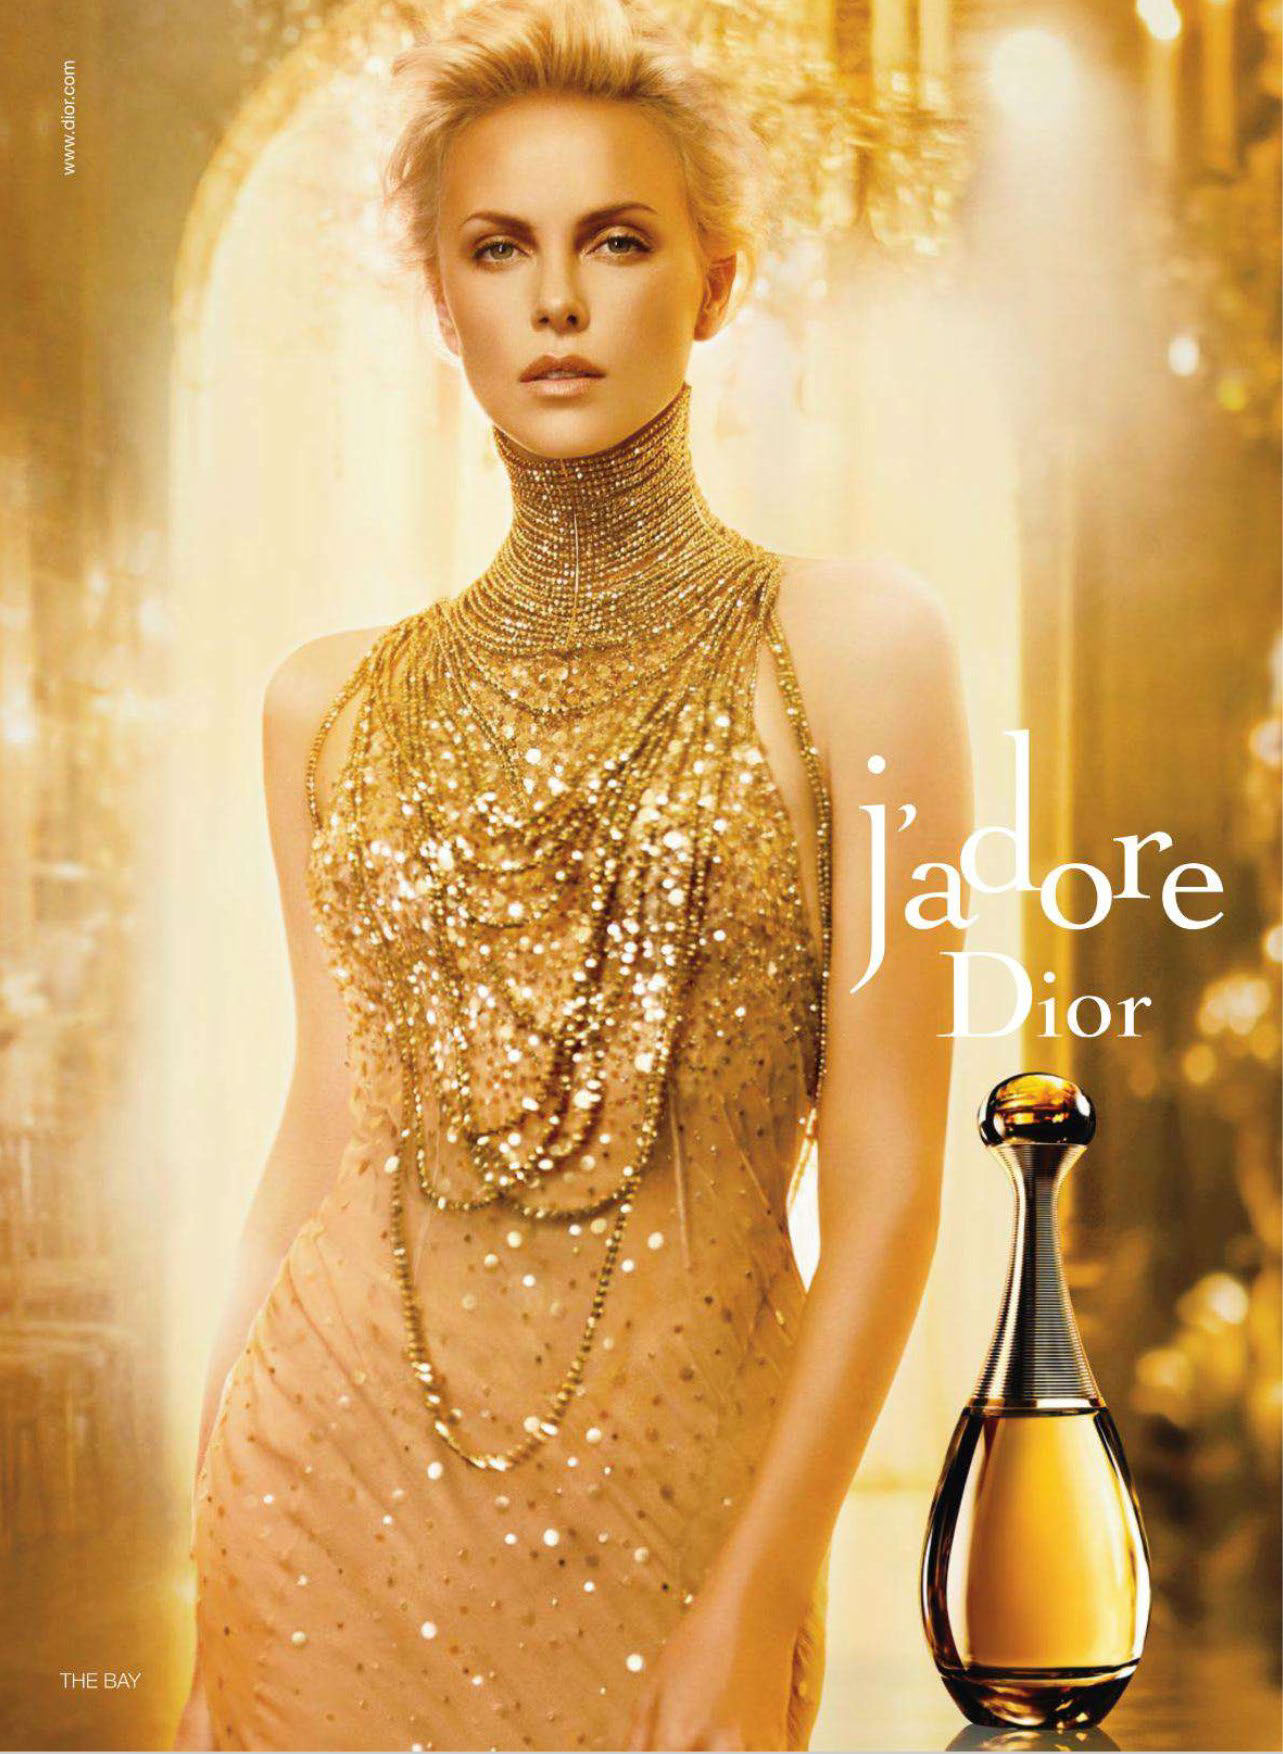 dior perfume models names